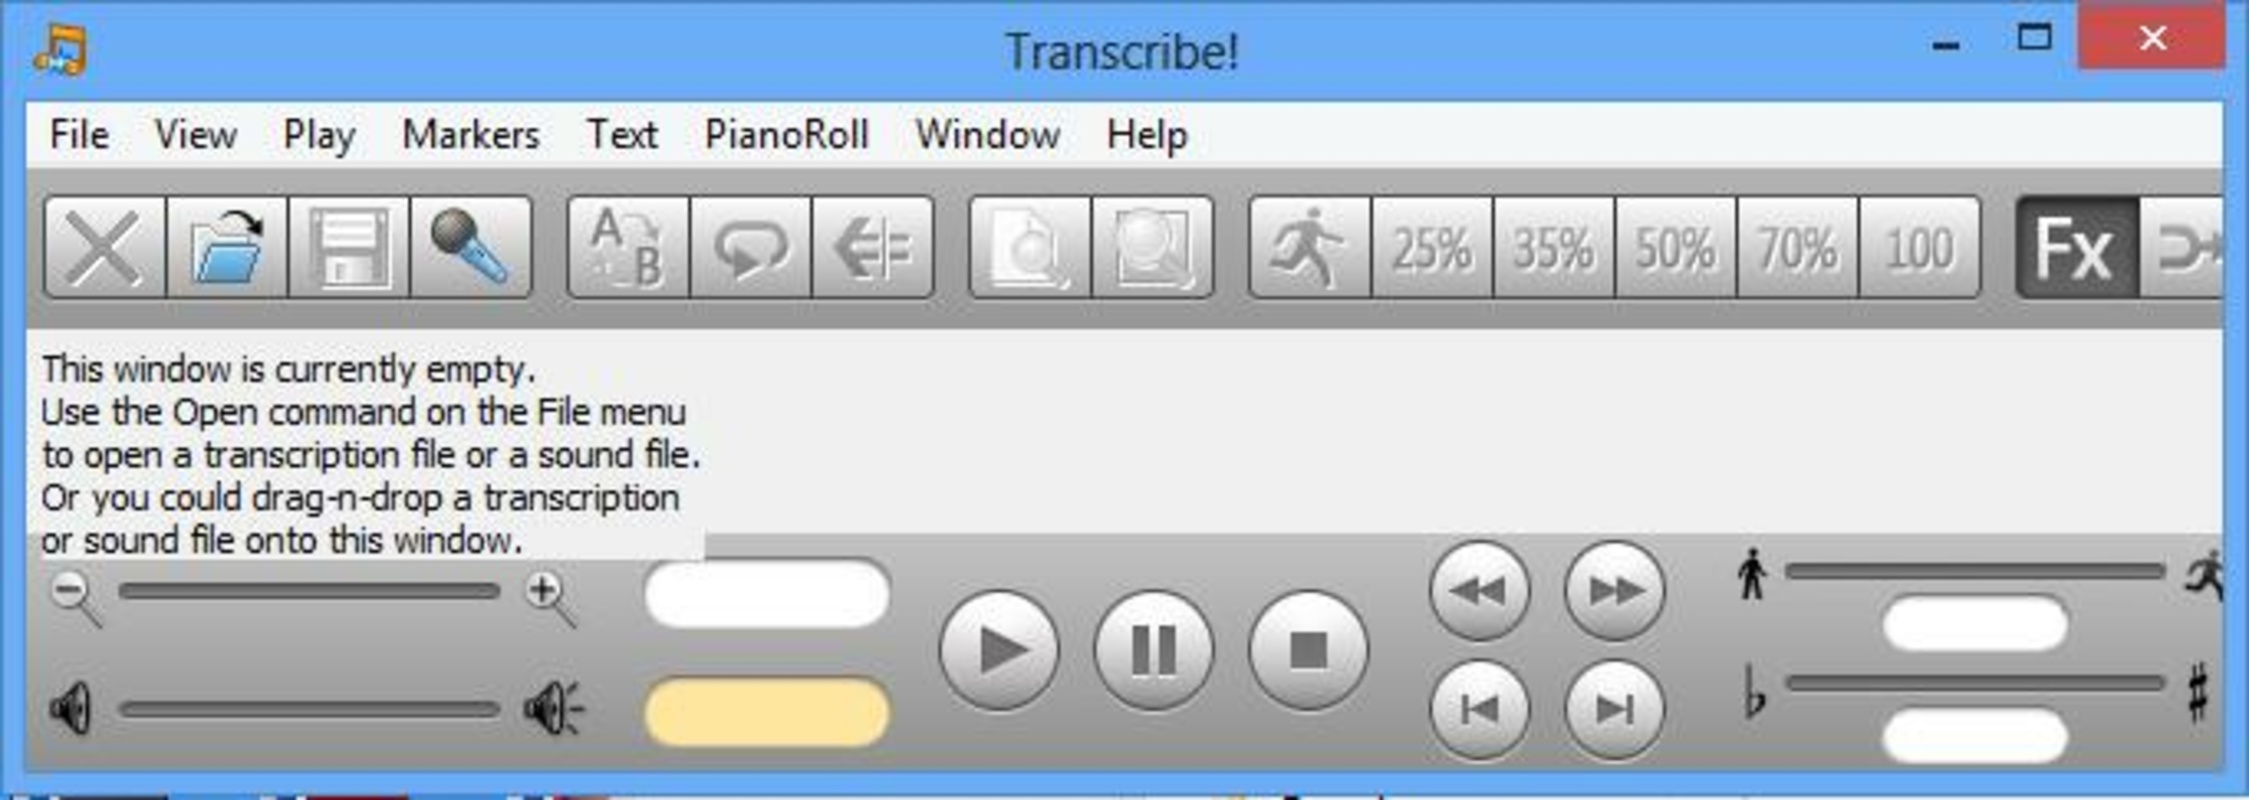 Transcribe! 8.40 for Windows Screenshot 2